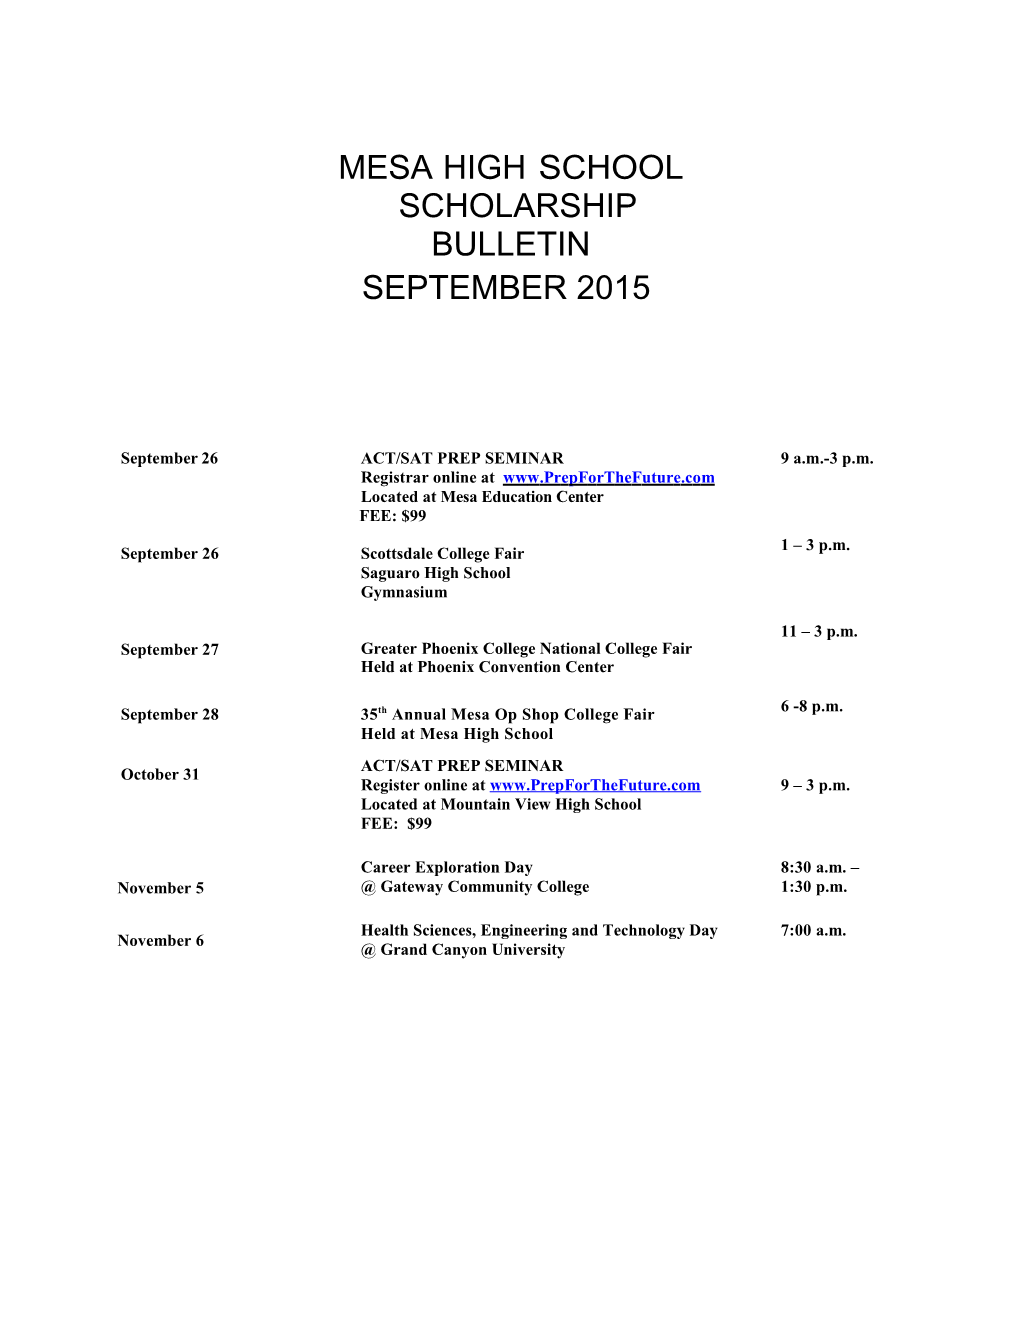 Mesa High School Scholarship Bulletin